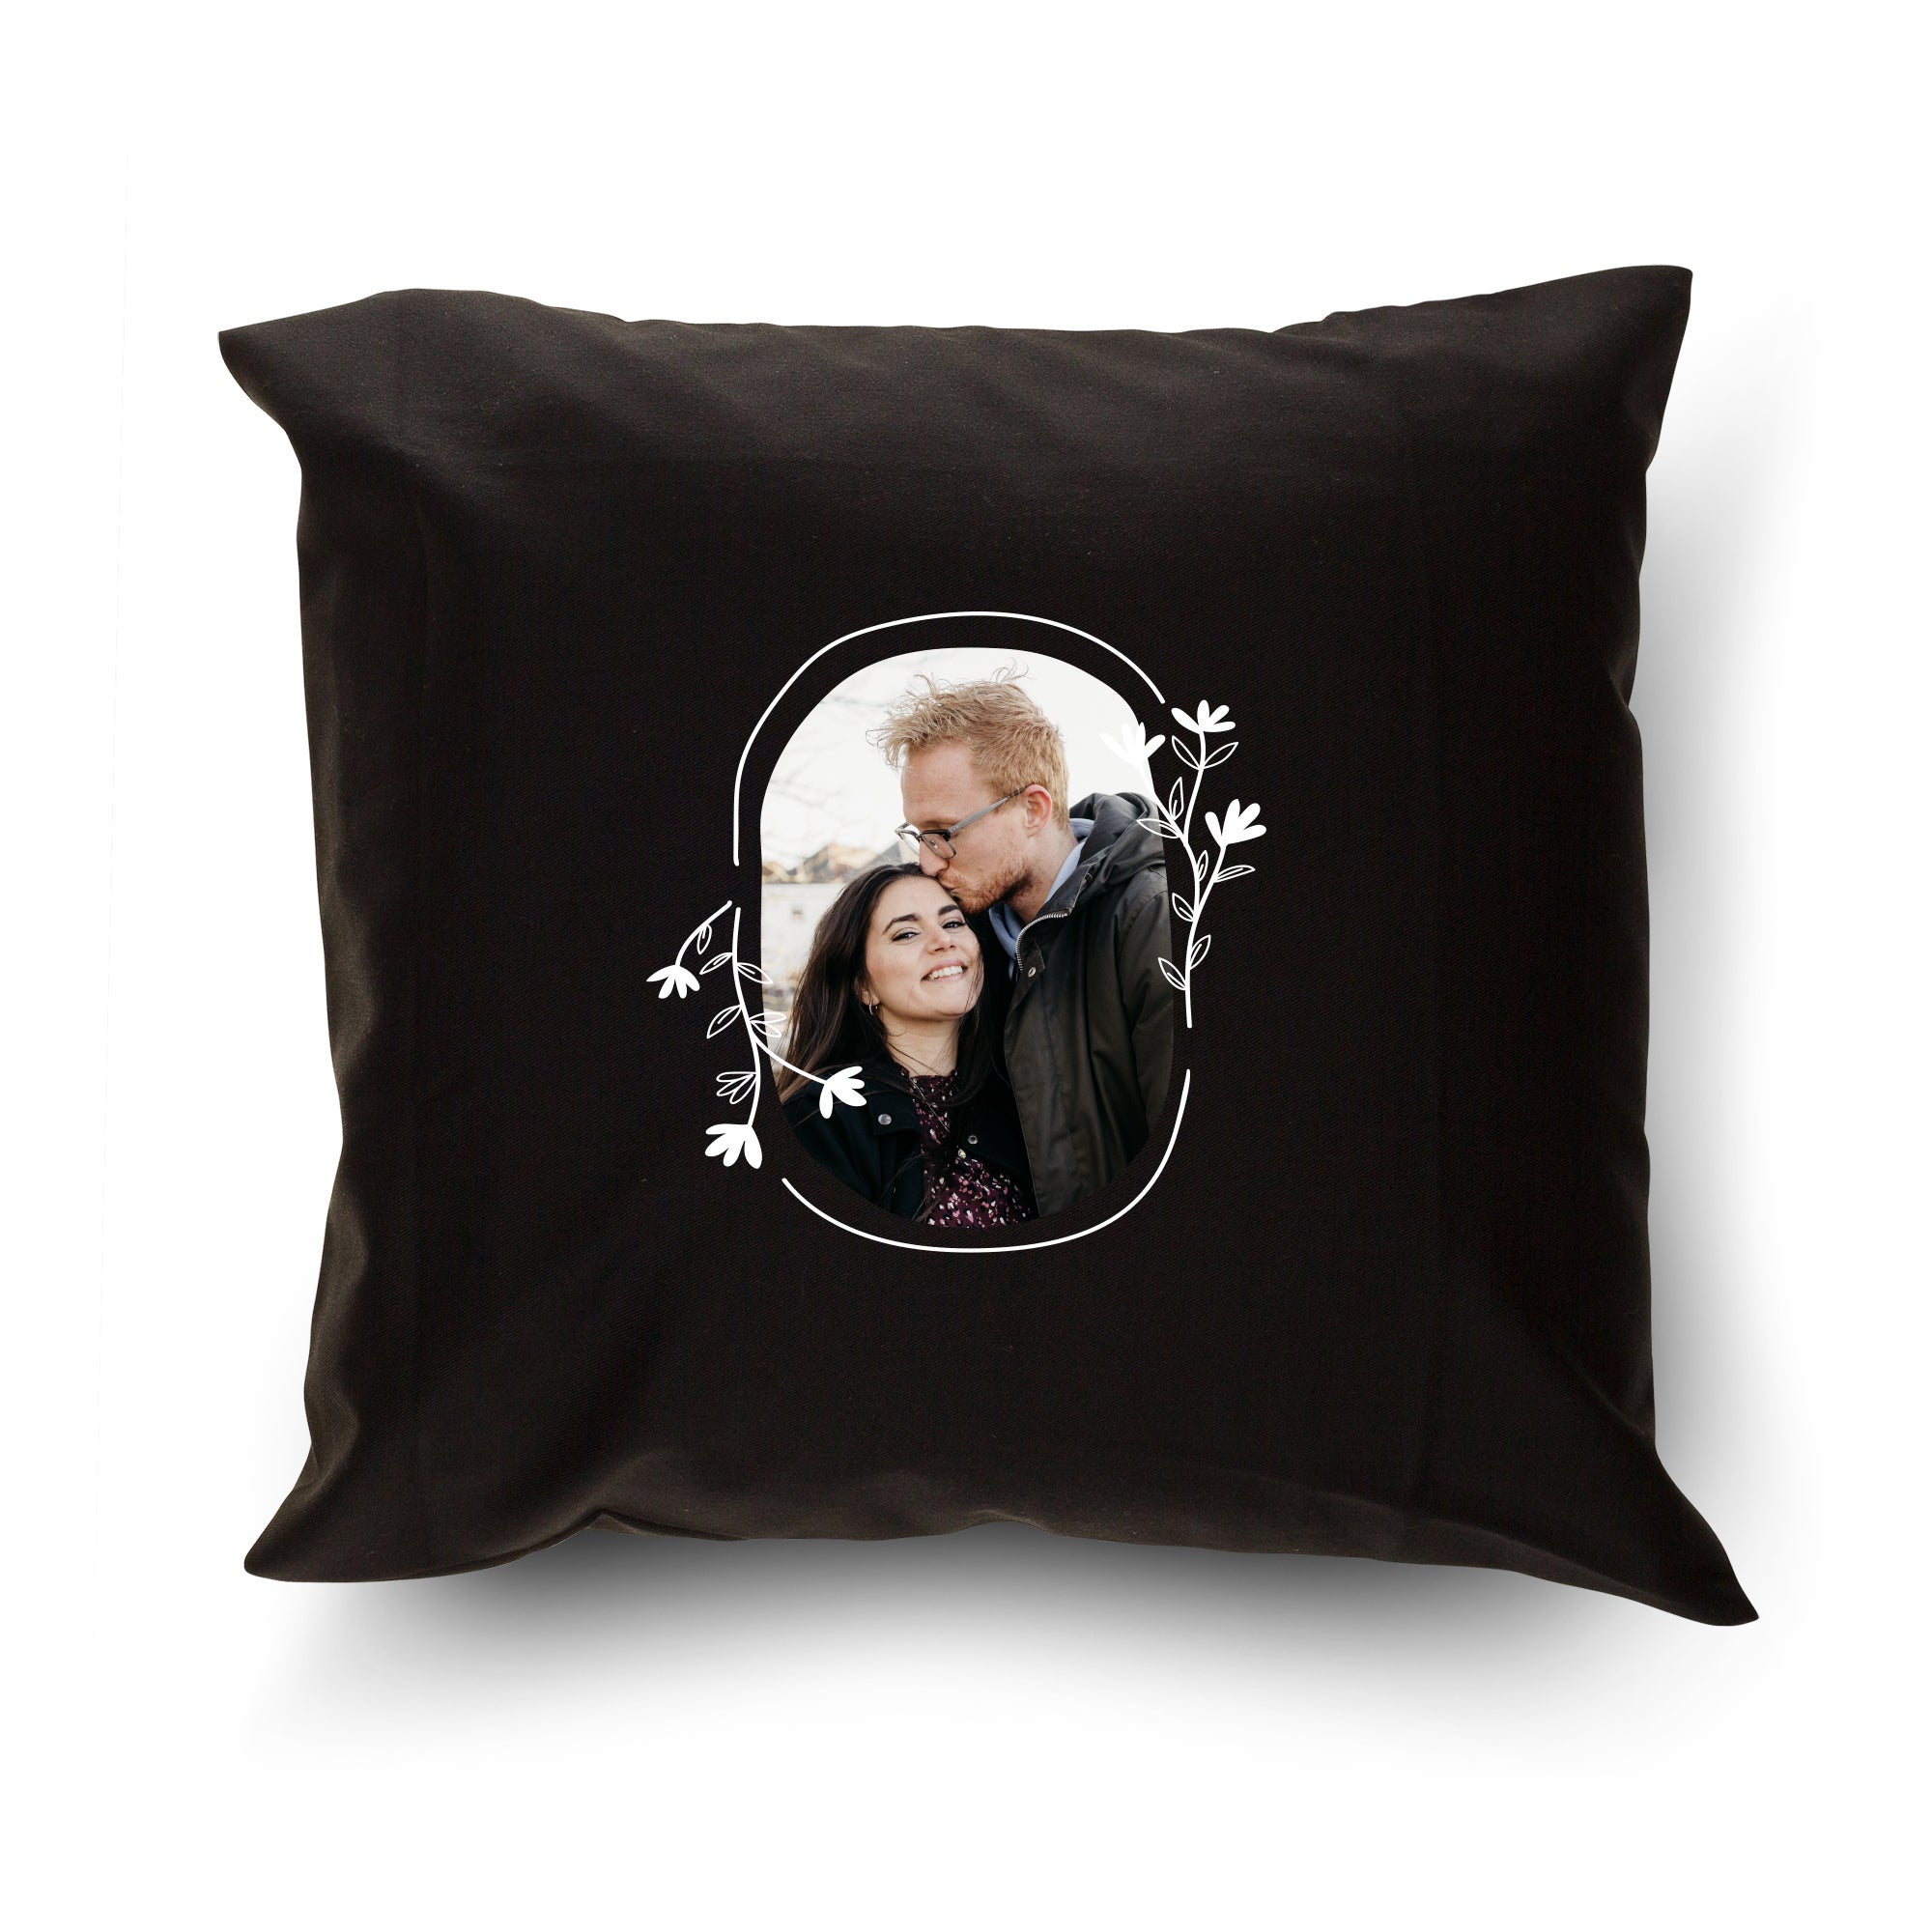 Personalised cushion case - Black- 40 x 40 cm